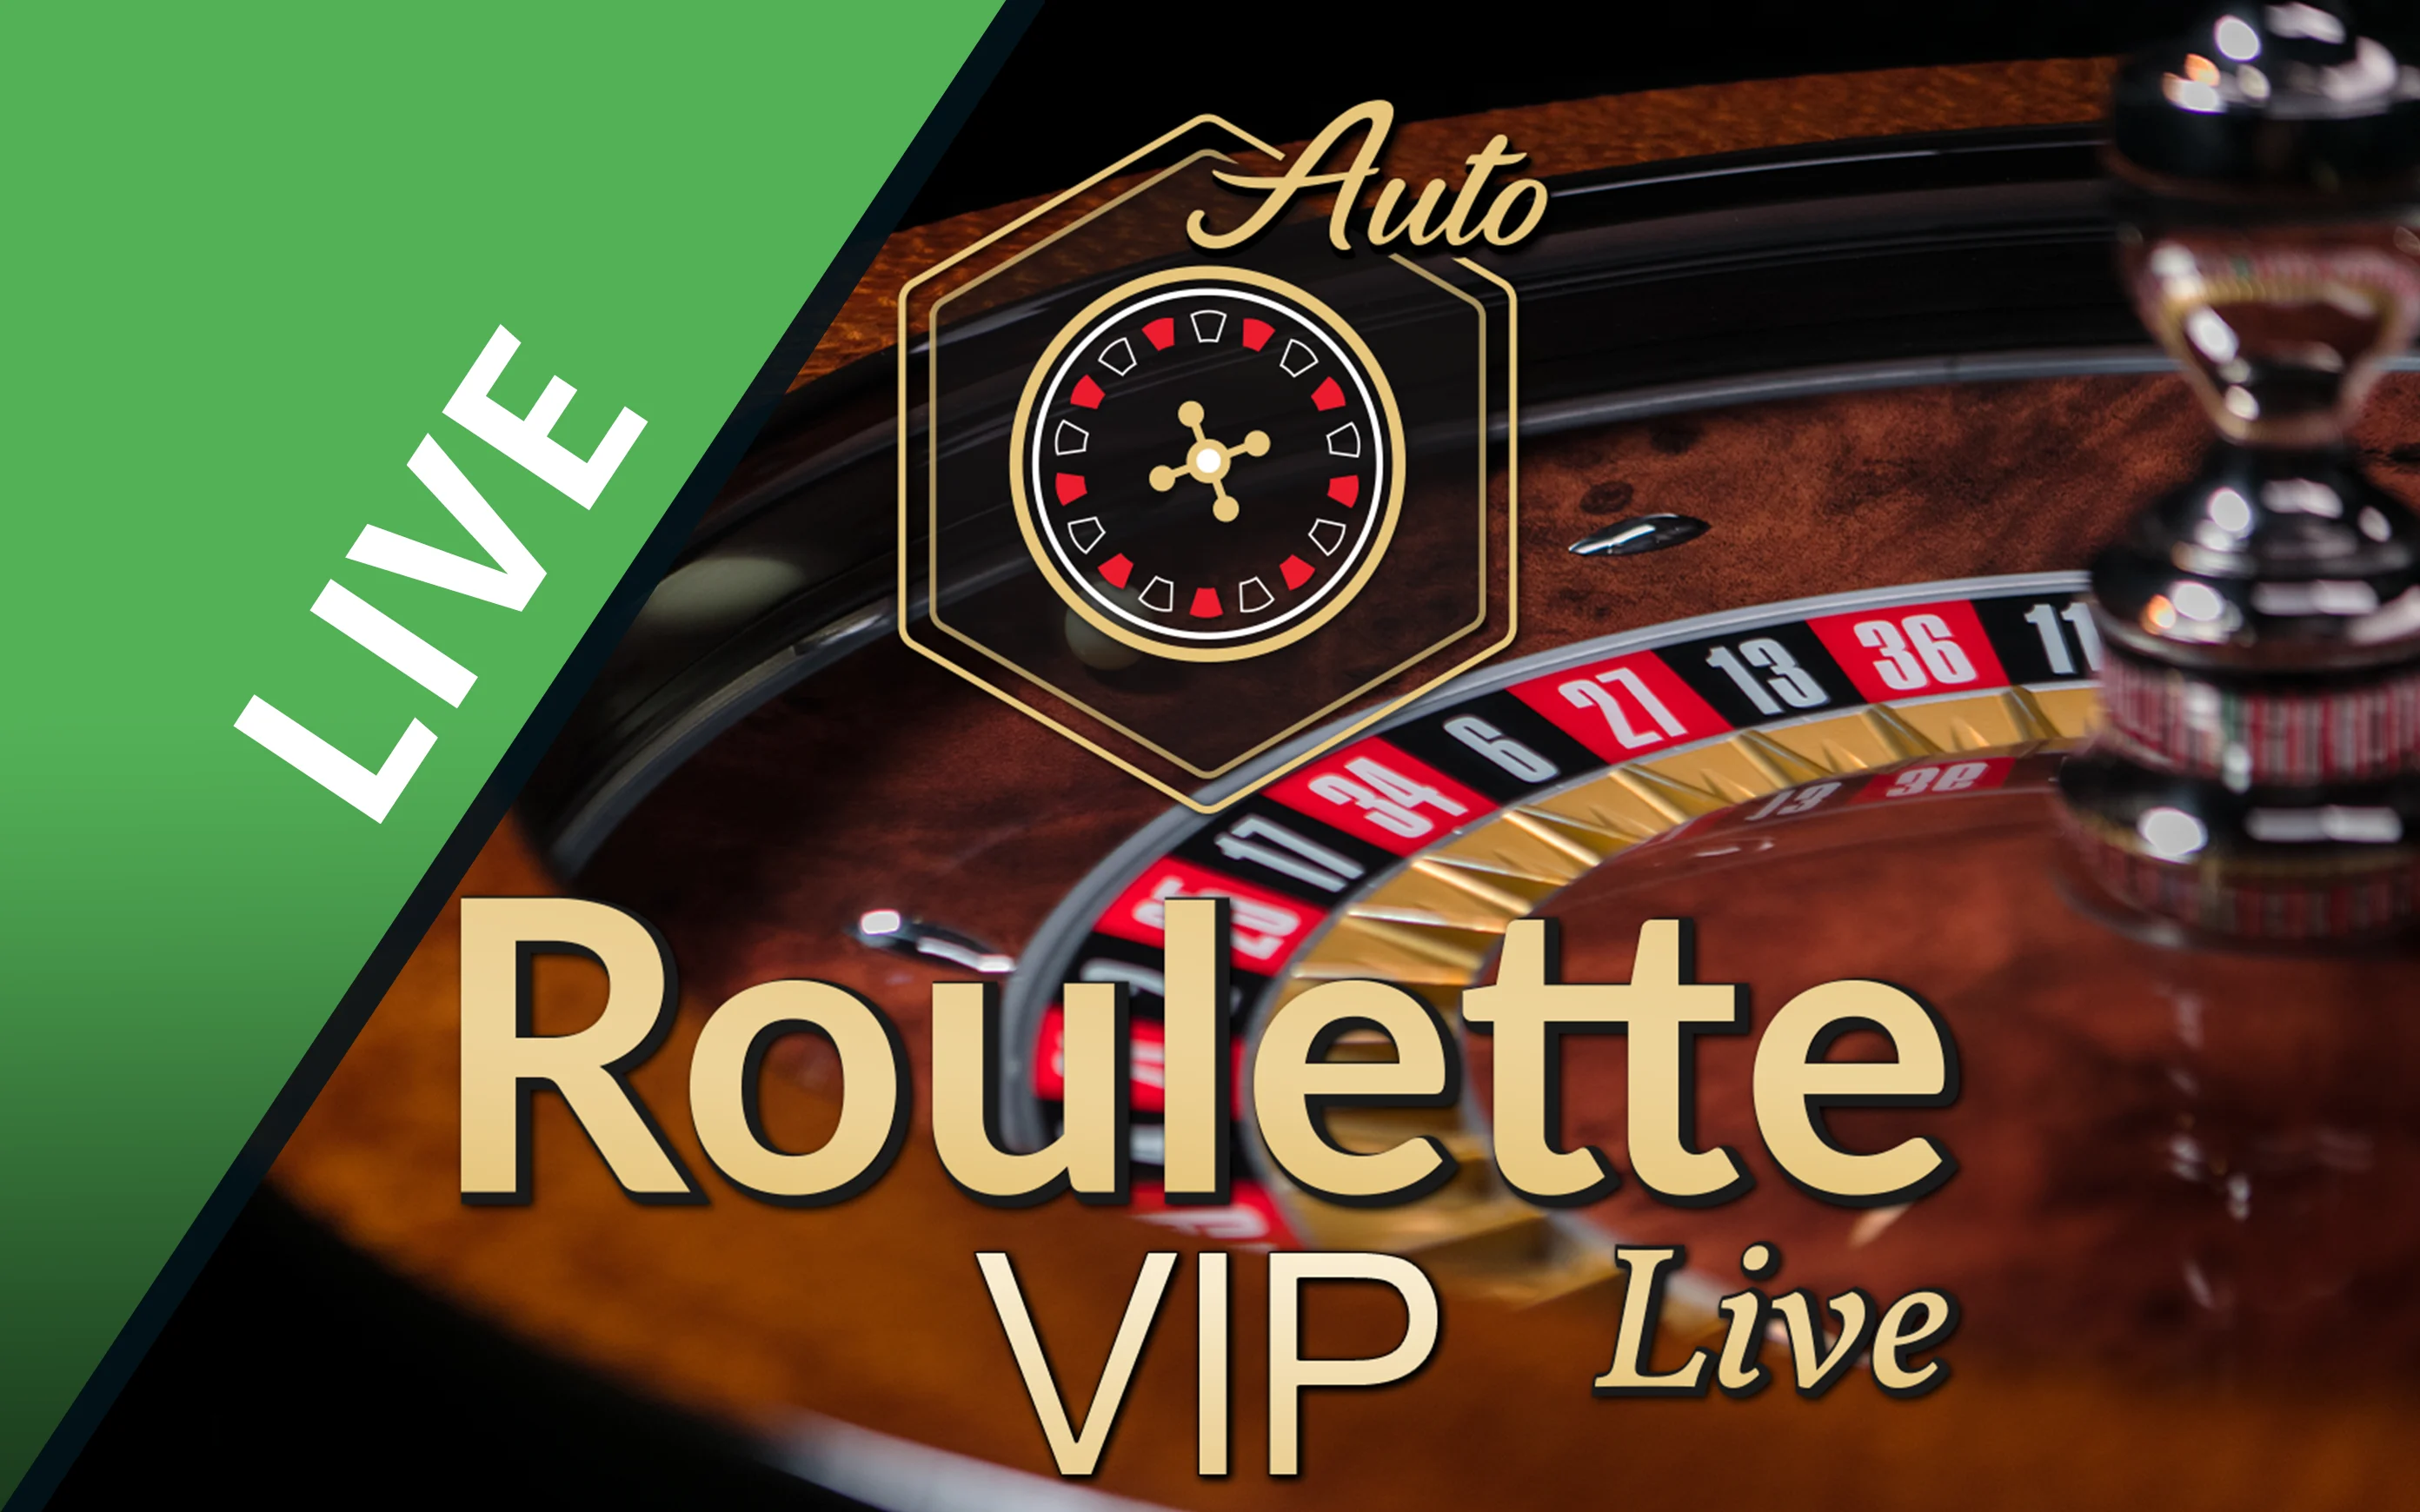 Starcasino.be online casino üzerinden Auto Roulette VIP oynayın